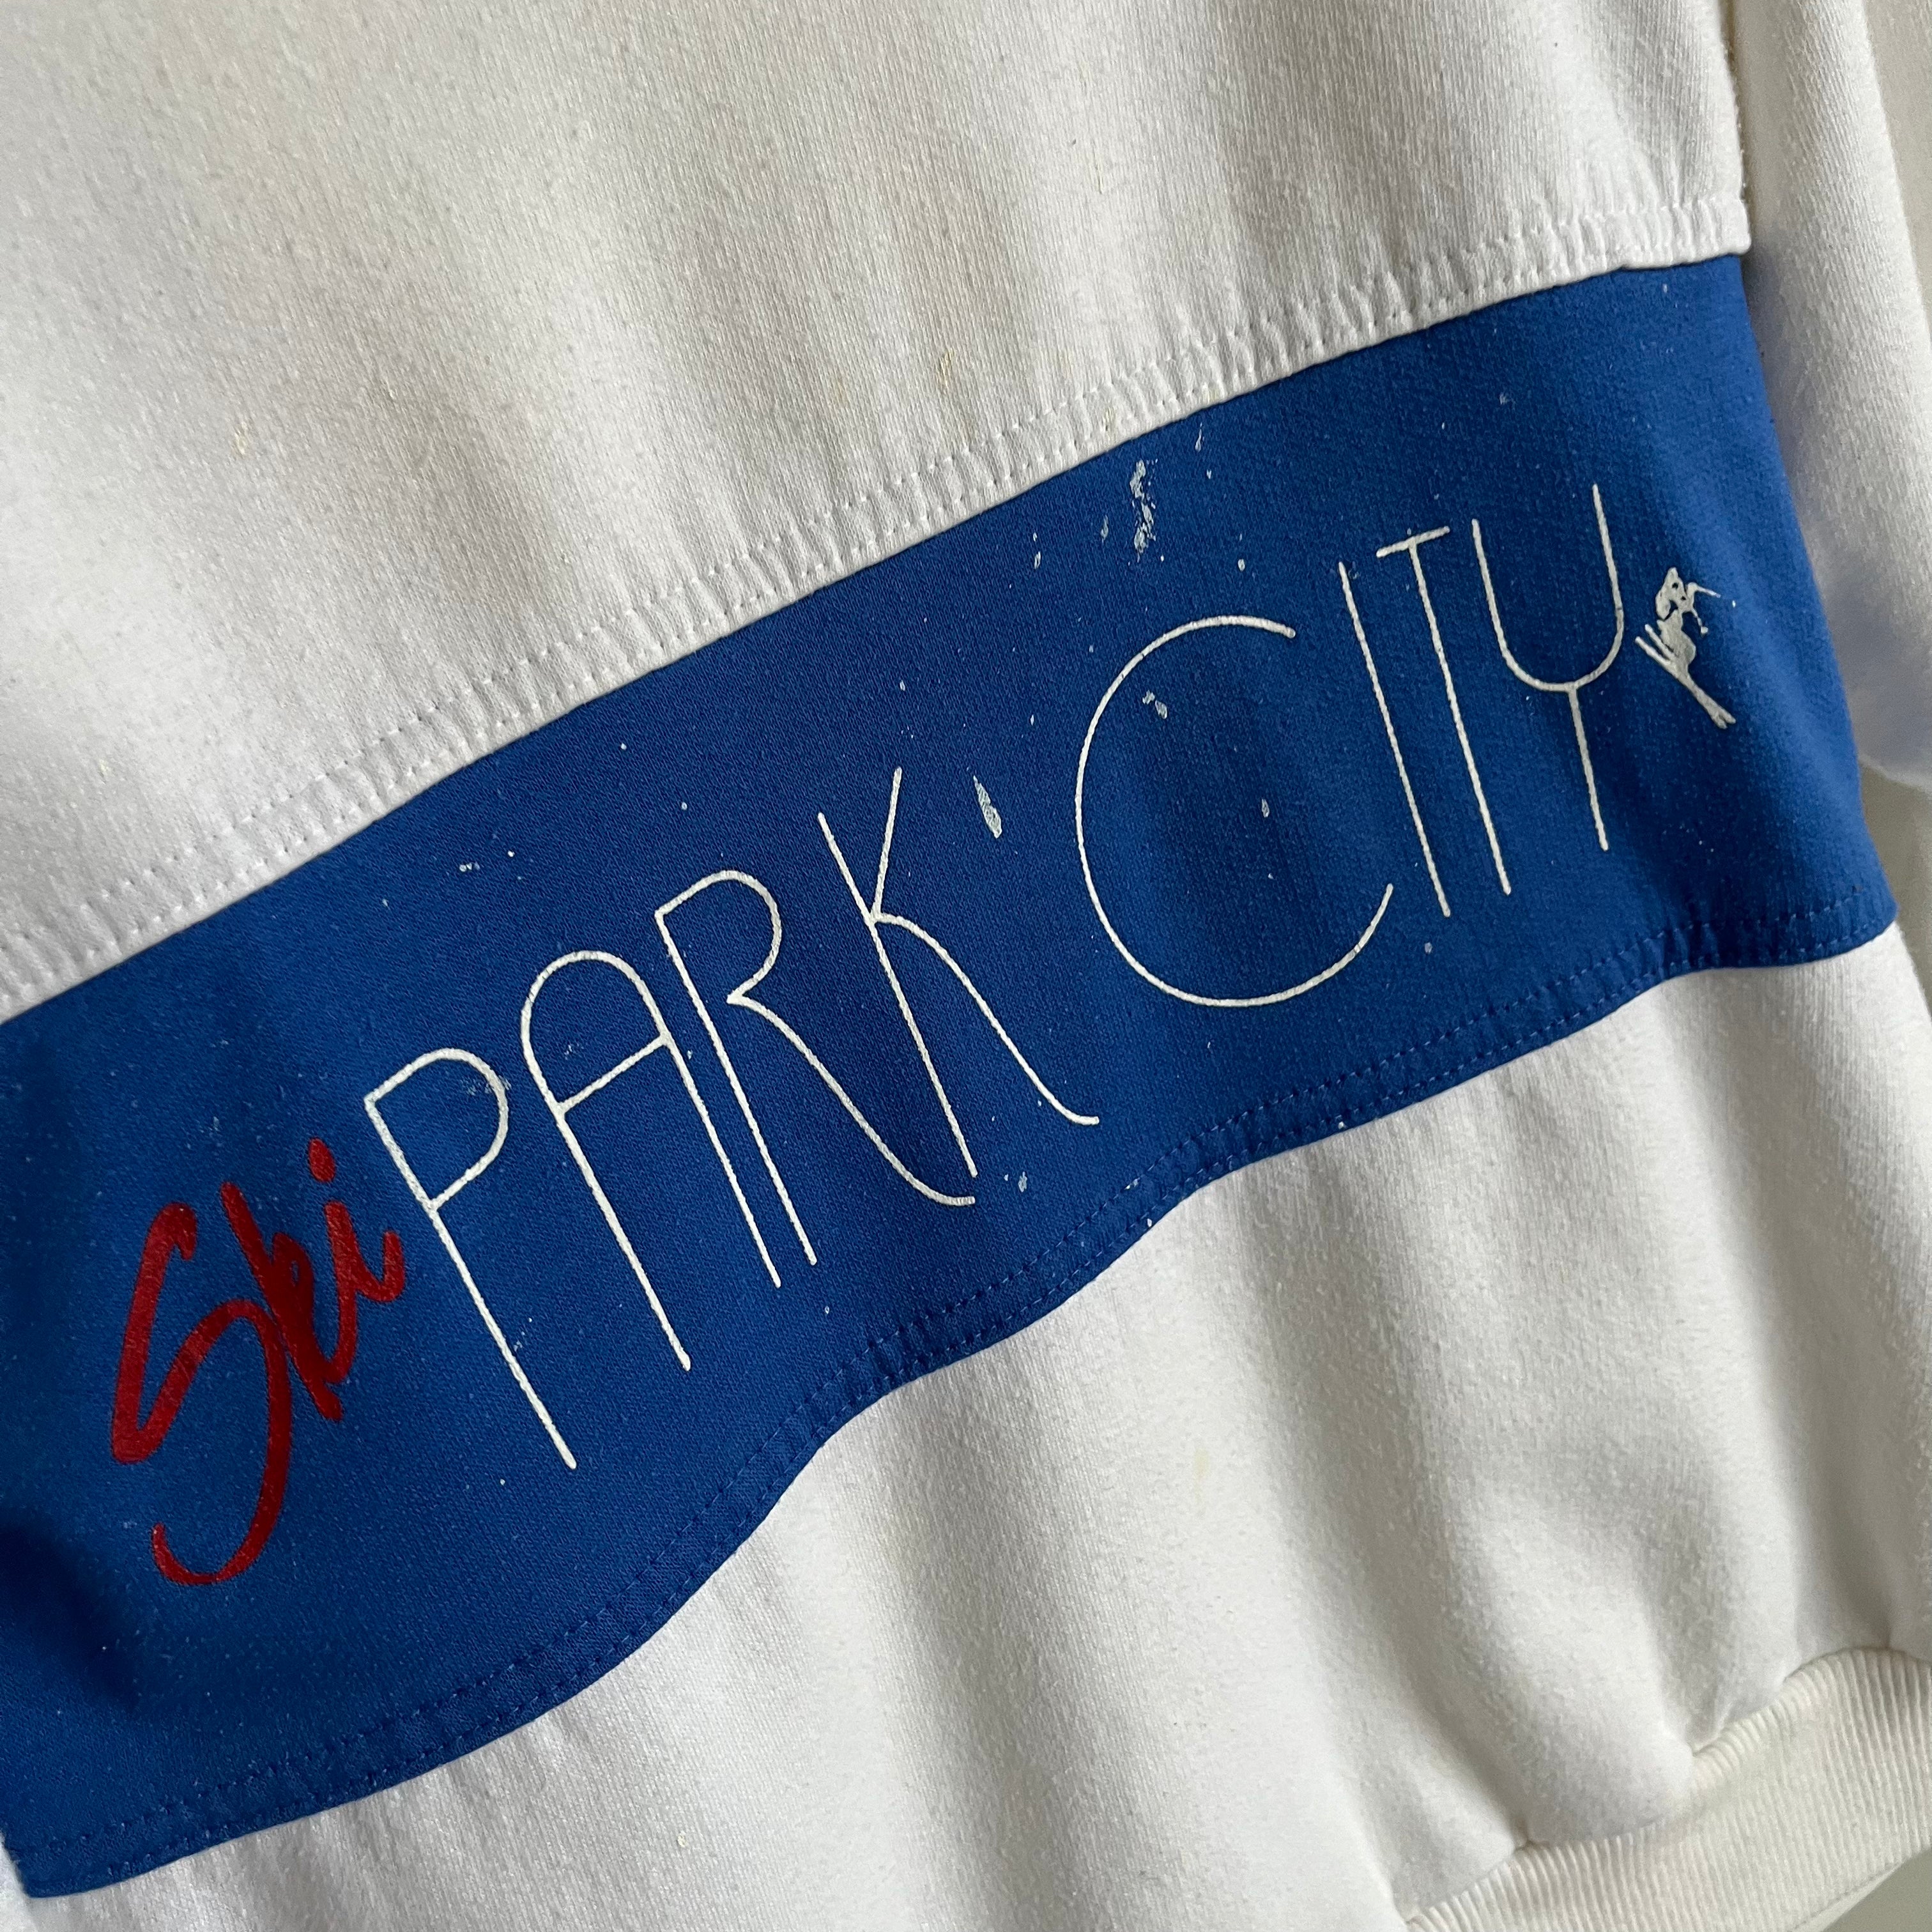 1980s Park City Color Block Paint Stained Sweat-shirt